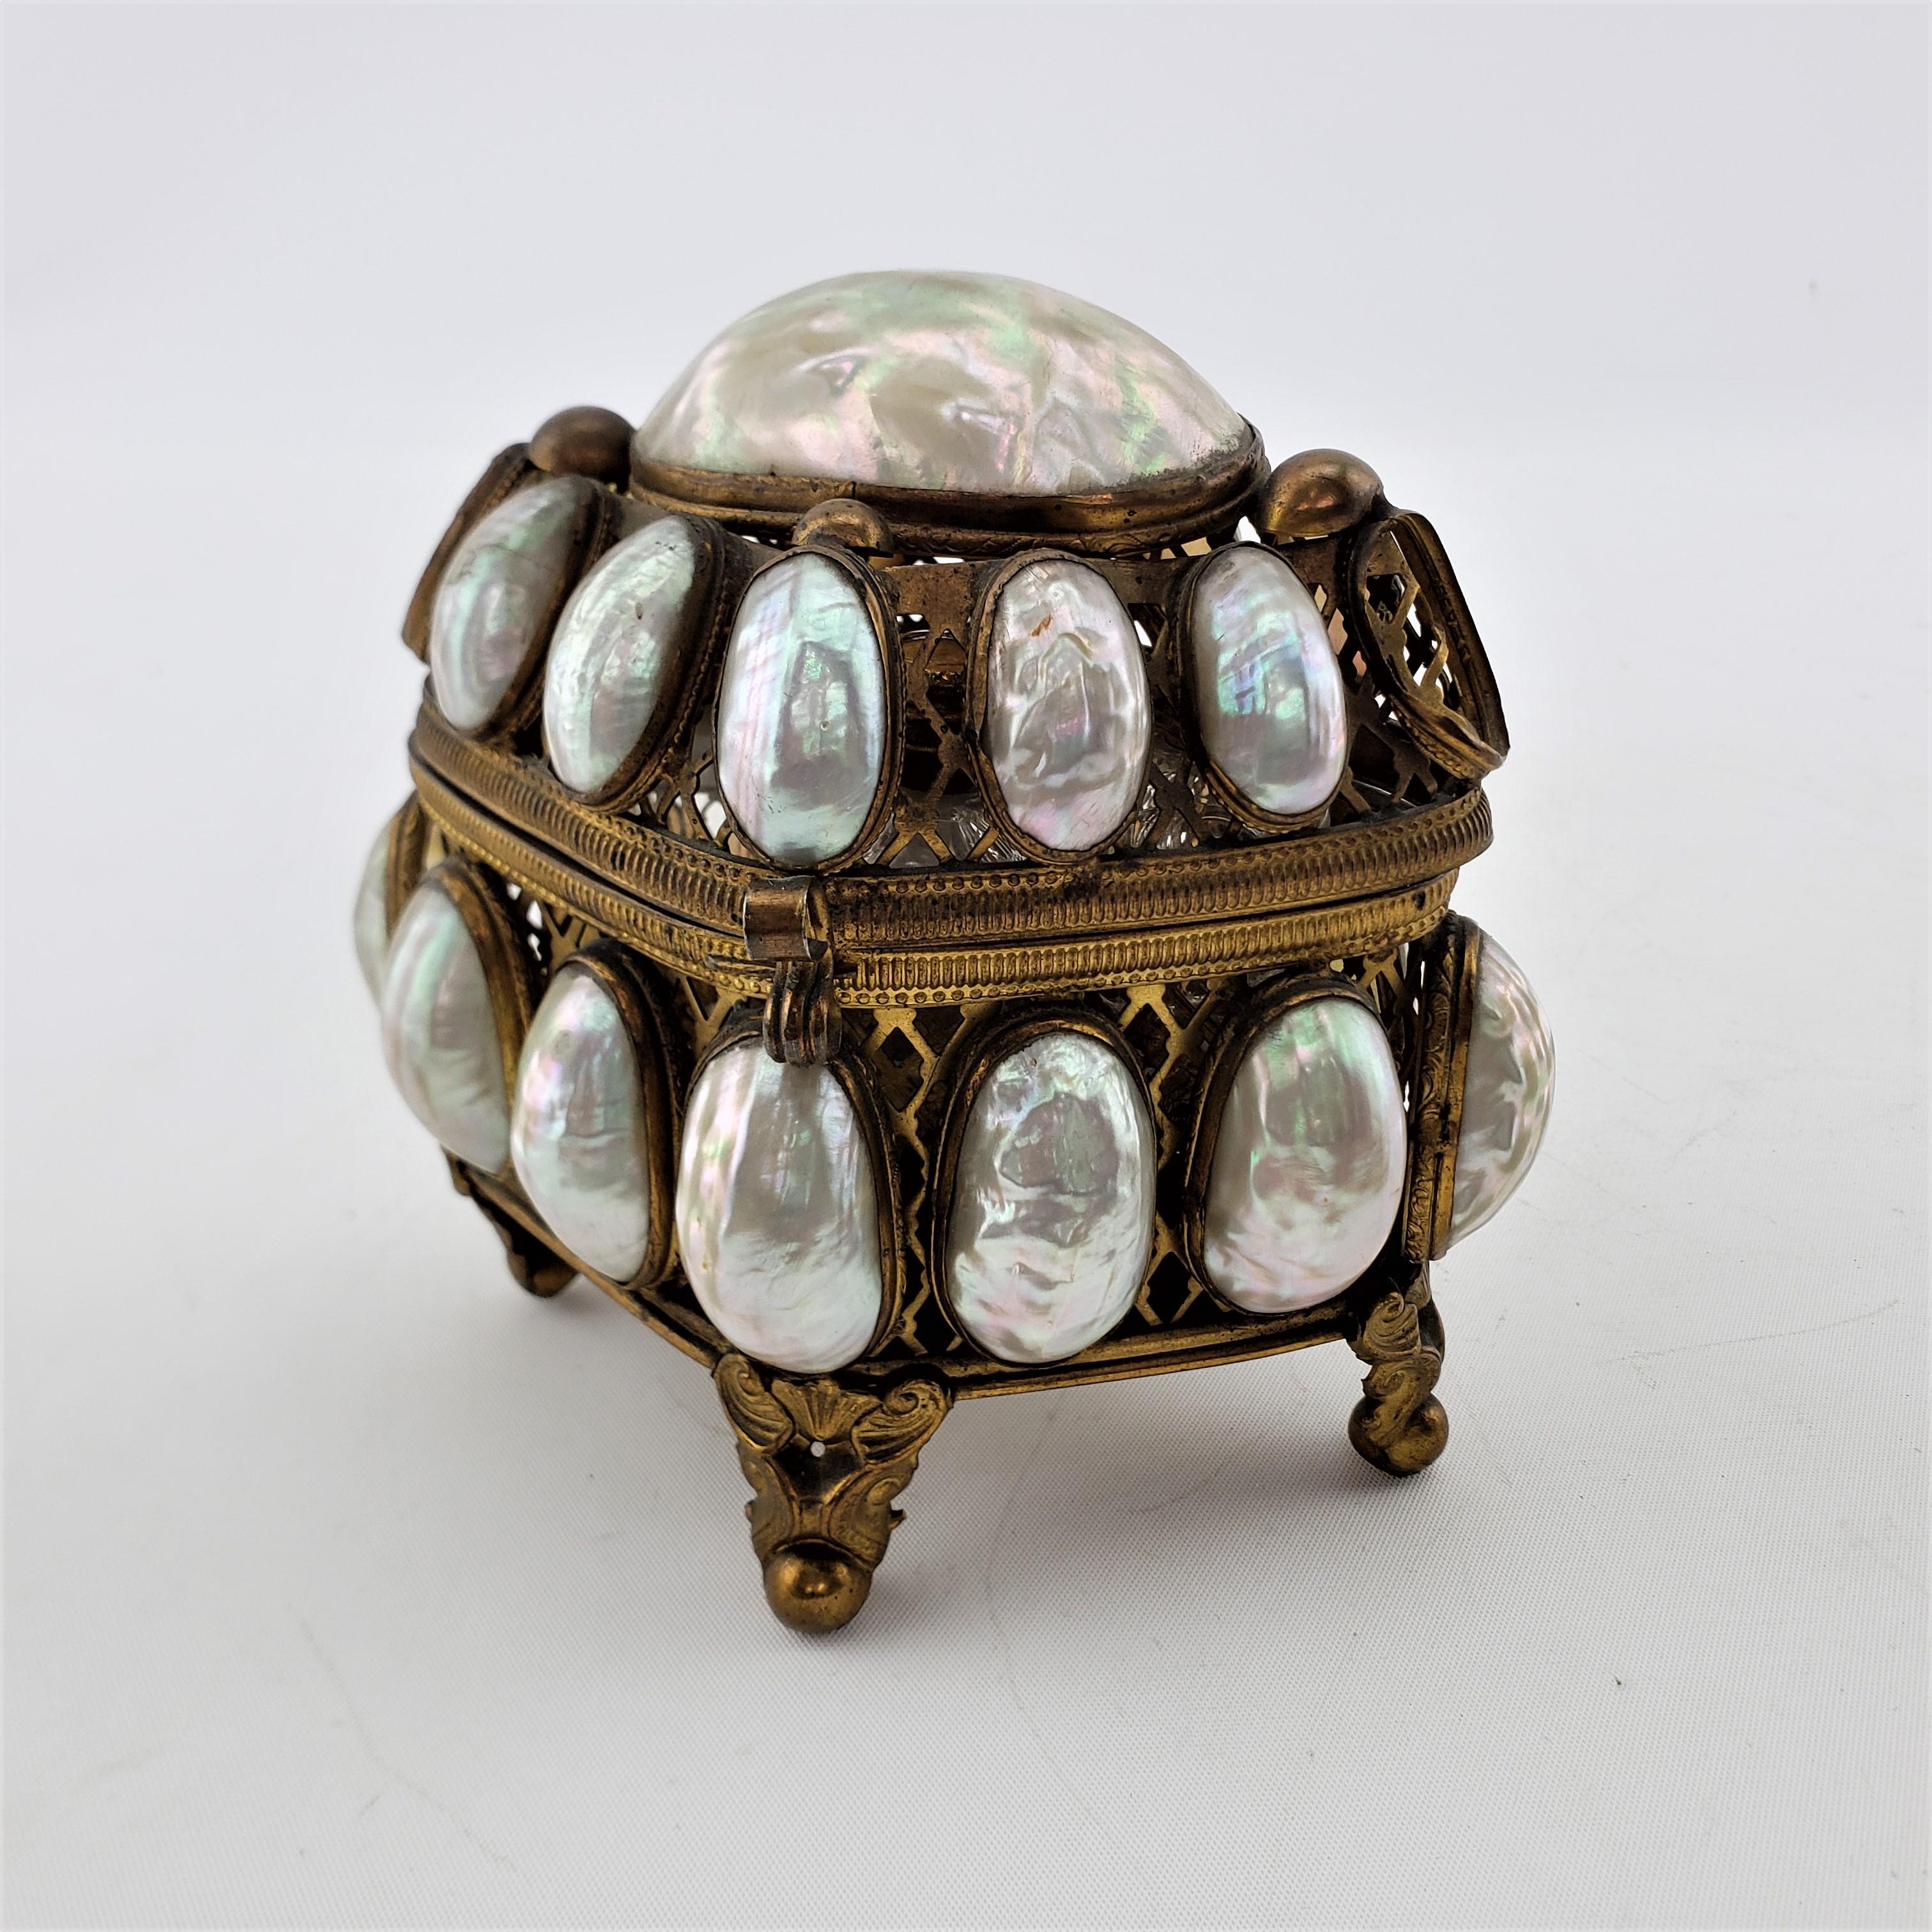 20th Century Antique Art Nouveau 3 Glass Perfume or Scent Bottle Set with Inset Shells For Sale